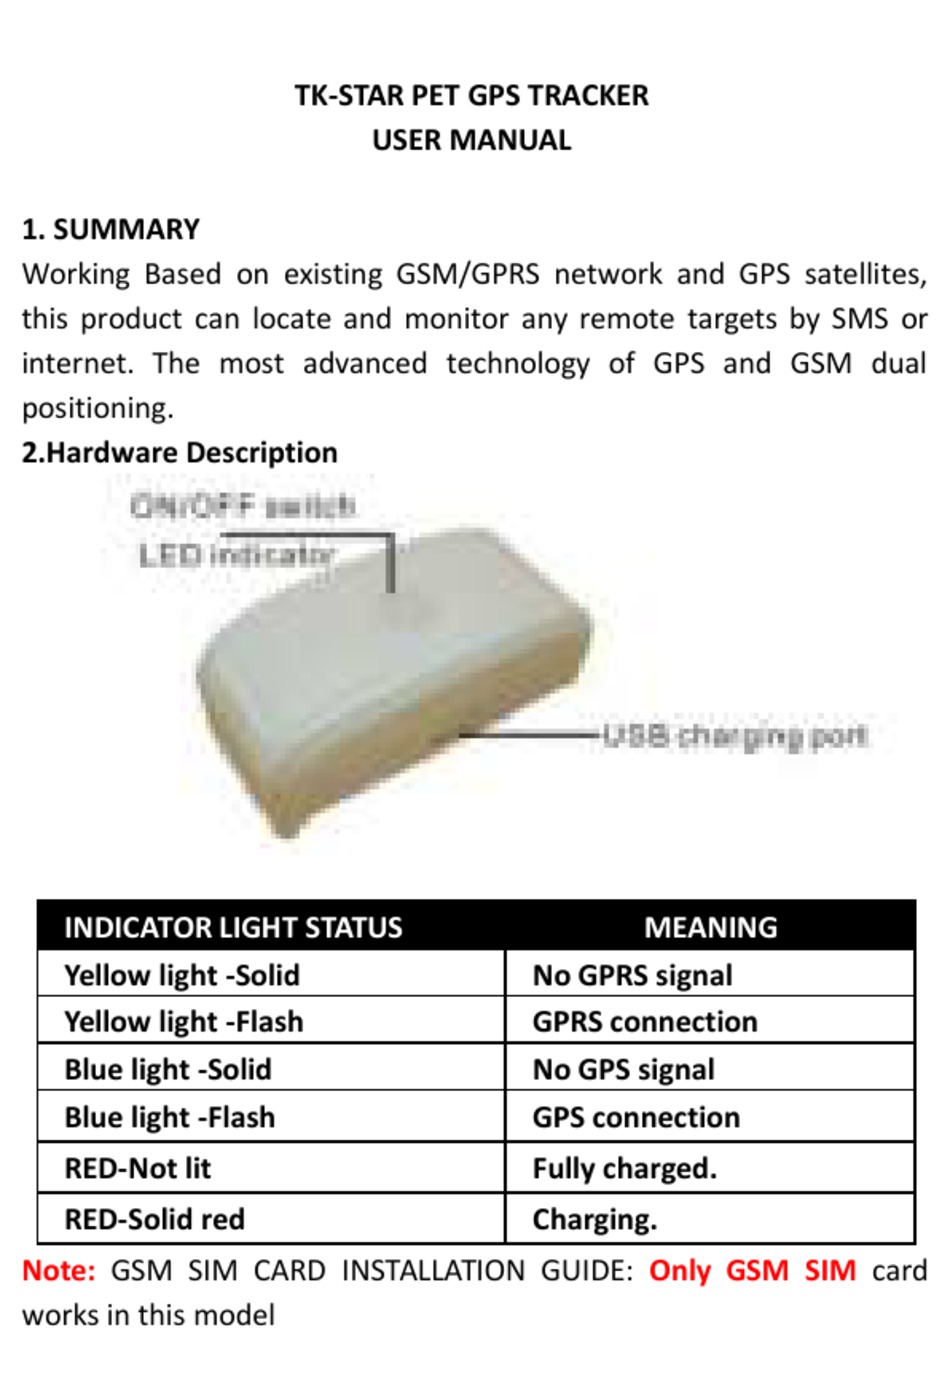 TK-STAR GPS TRACKER USER MANUAL Pdf Download | ManualsLib